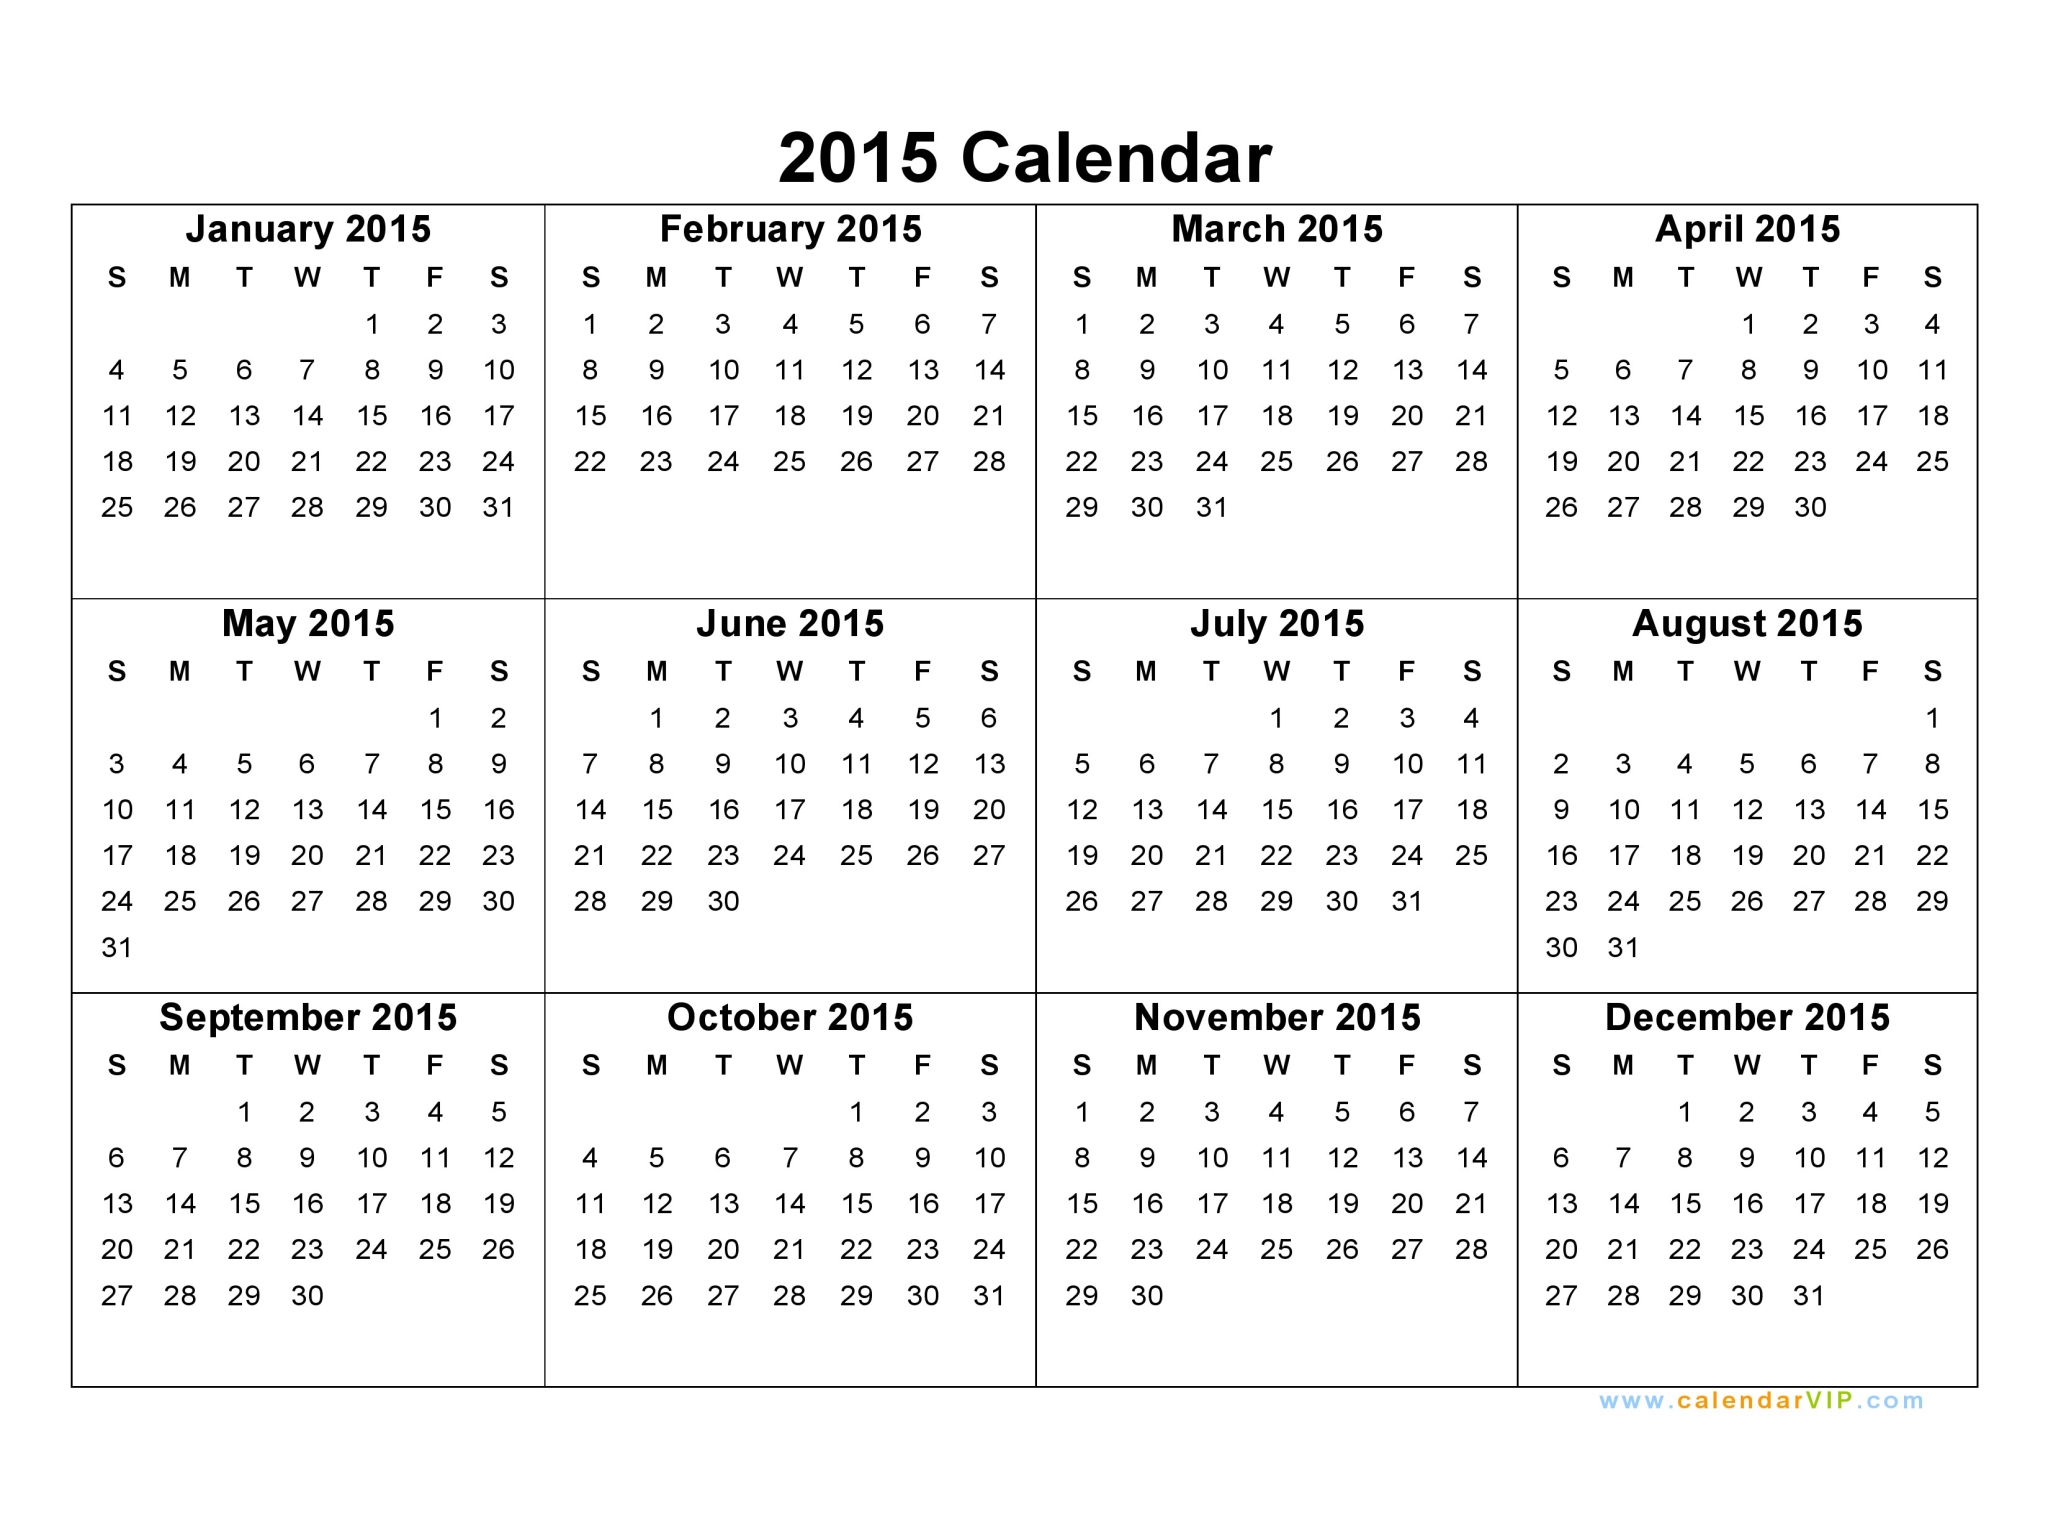 Microsoft Excel Calendar 2016 Template from www.calendarvip.com